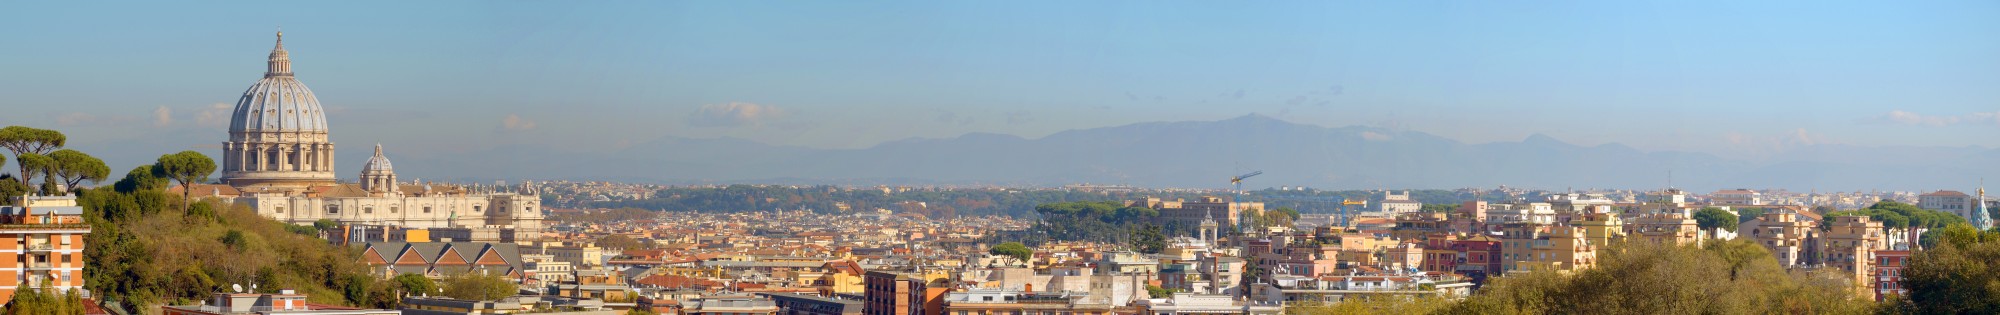 Panorama of Rome view from Via San Lucio